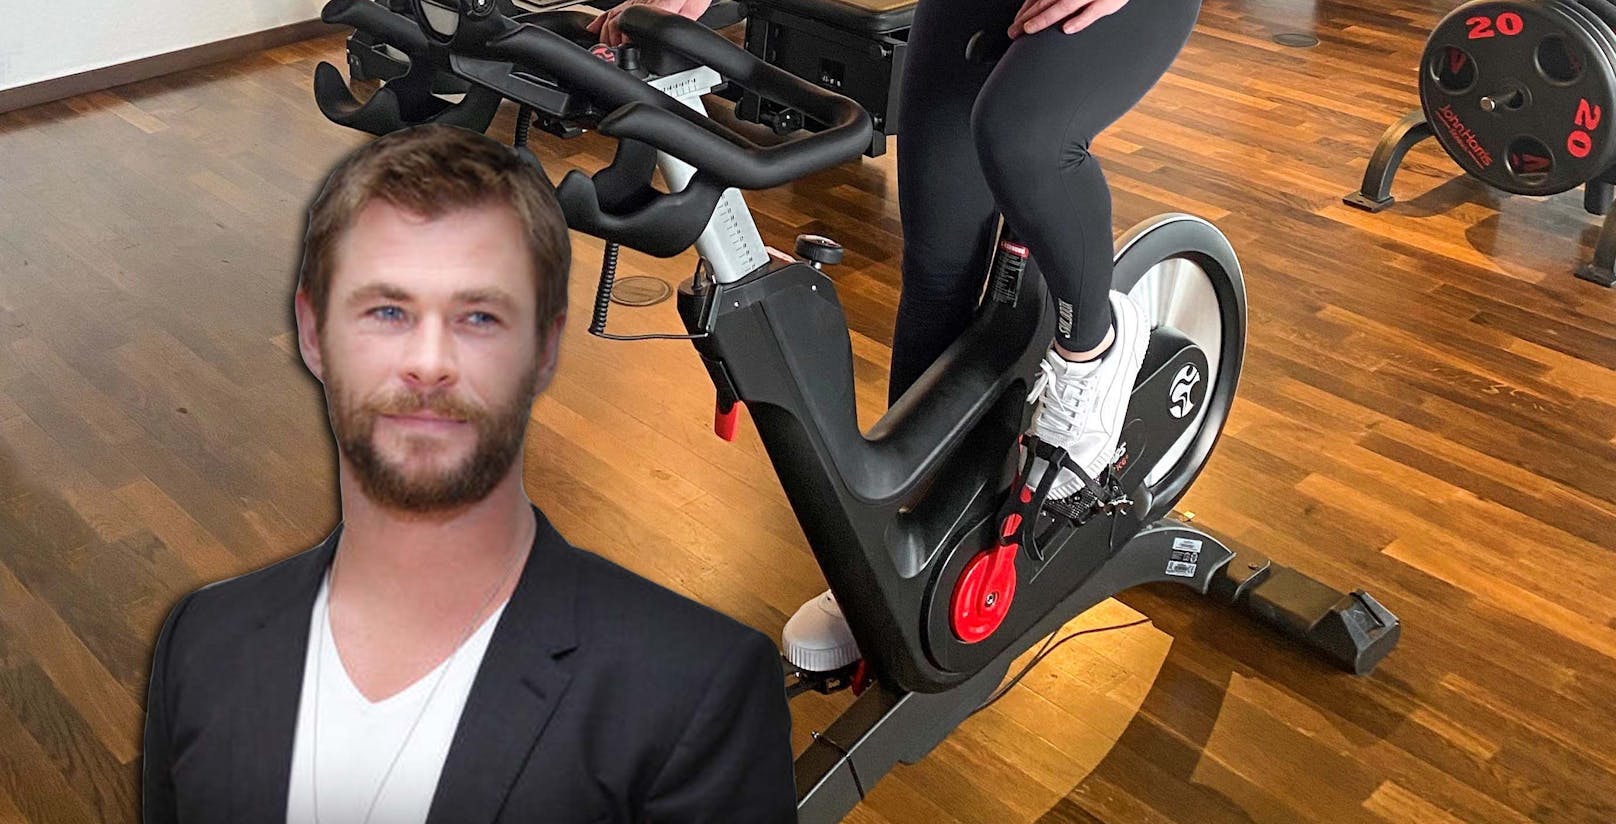 Hollywoodstar Hemsworth trainiert im Wiener John Harris